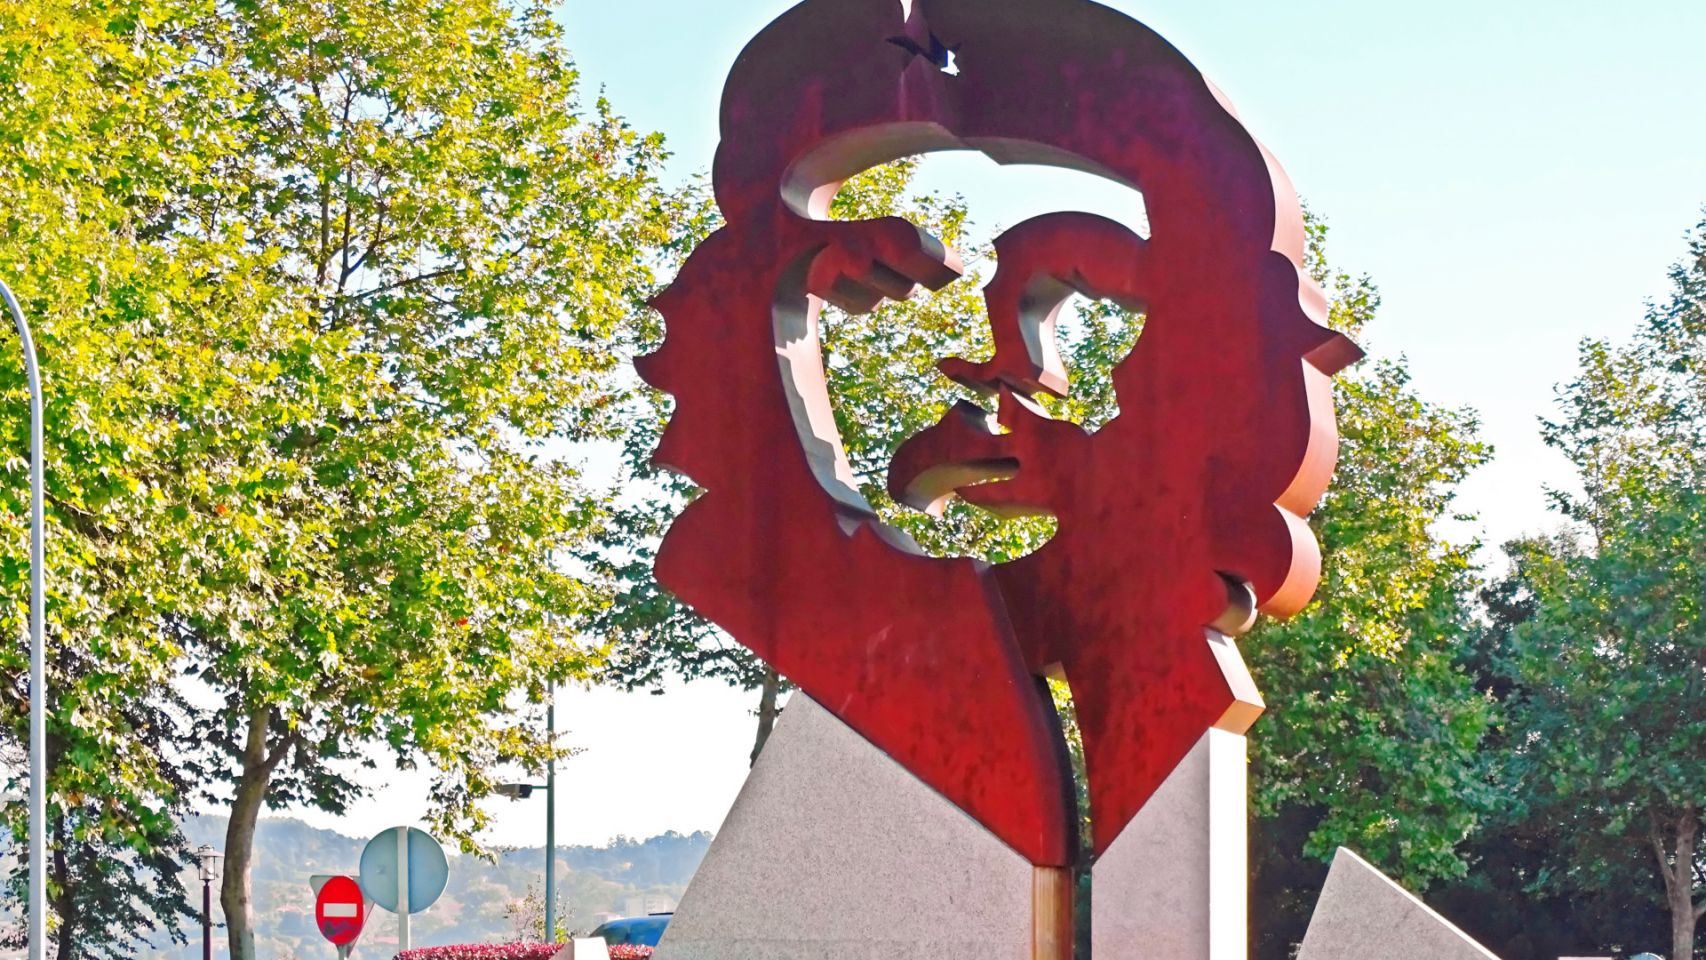 Escultura del Che en Oleiros, el municipio más rico de Galicia (Foto: Tenreiro vía Shutterstock)